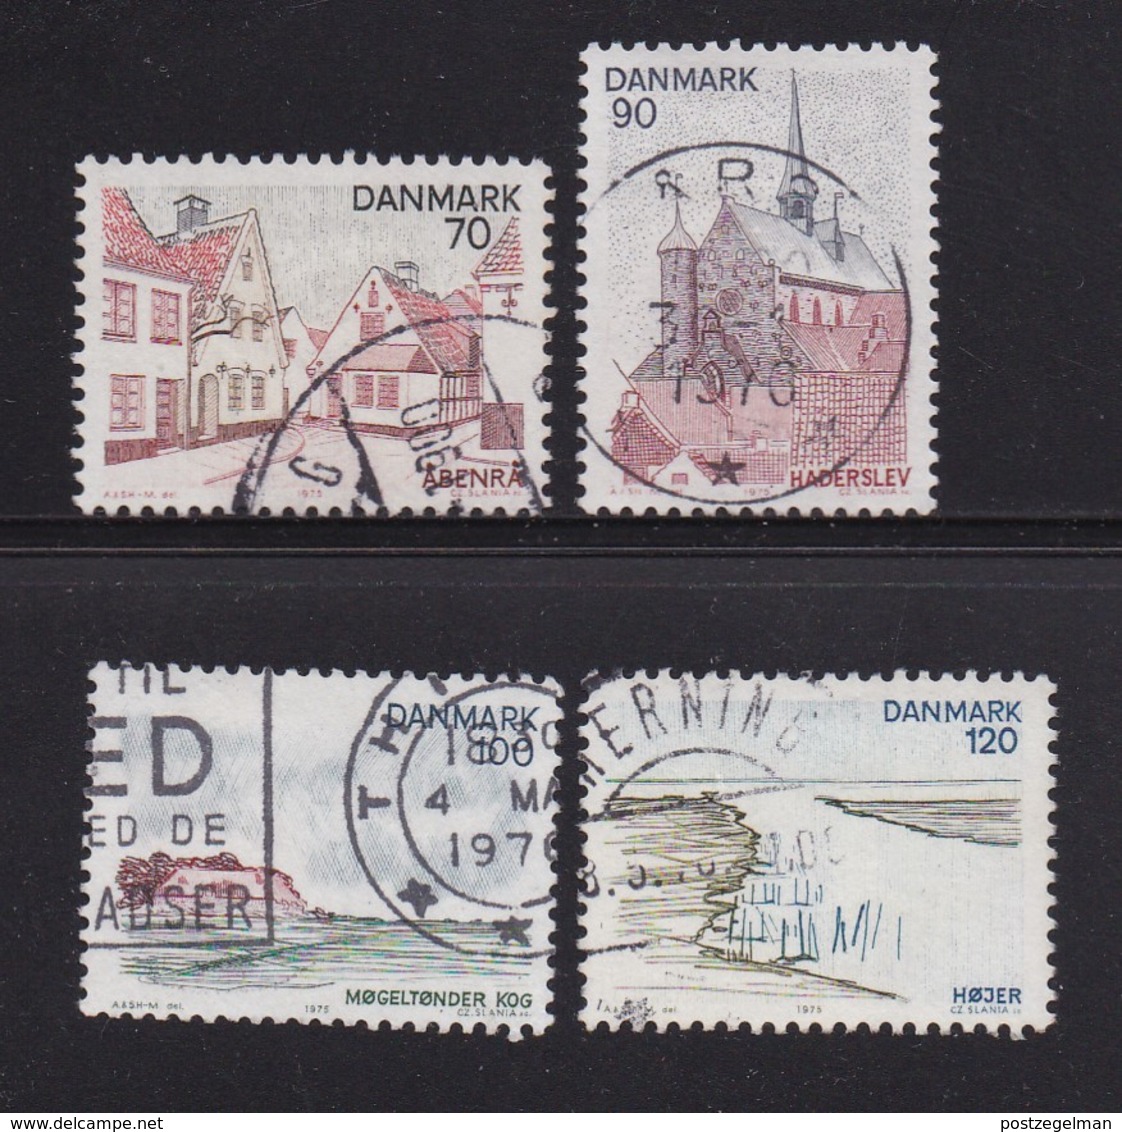 DENMARK, 1975, Used Stamp(s), Tourism Jutland,  MI 598-601, #10124, Complete - Used Stamps